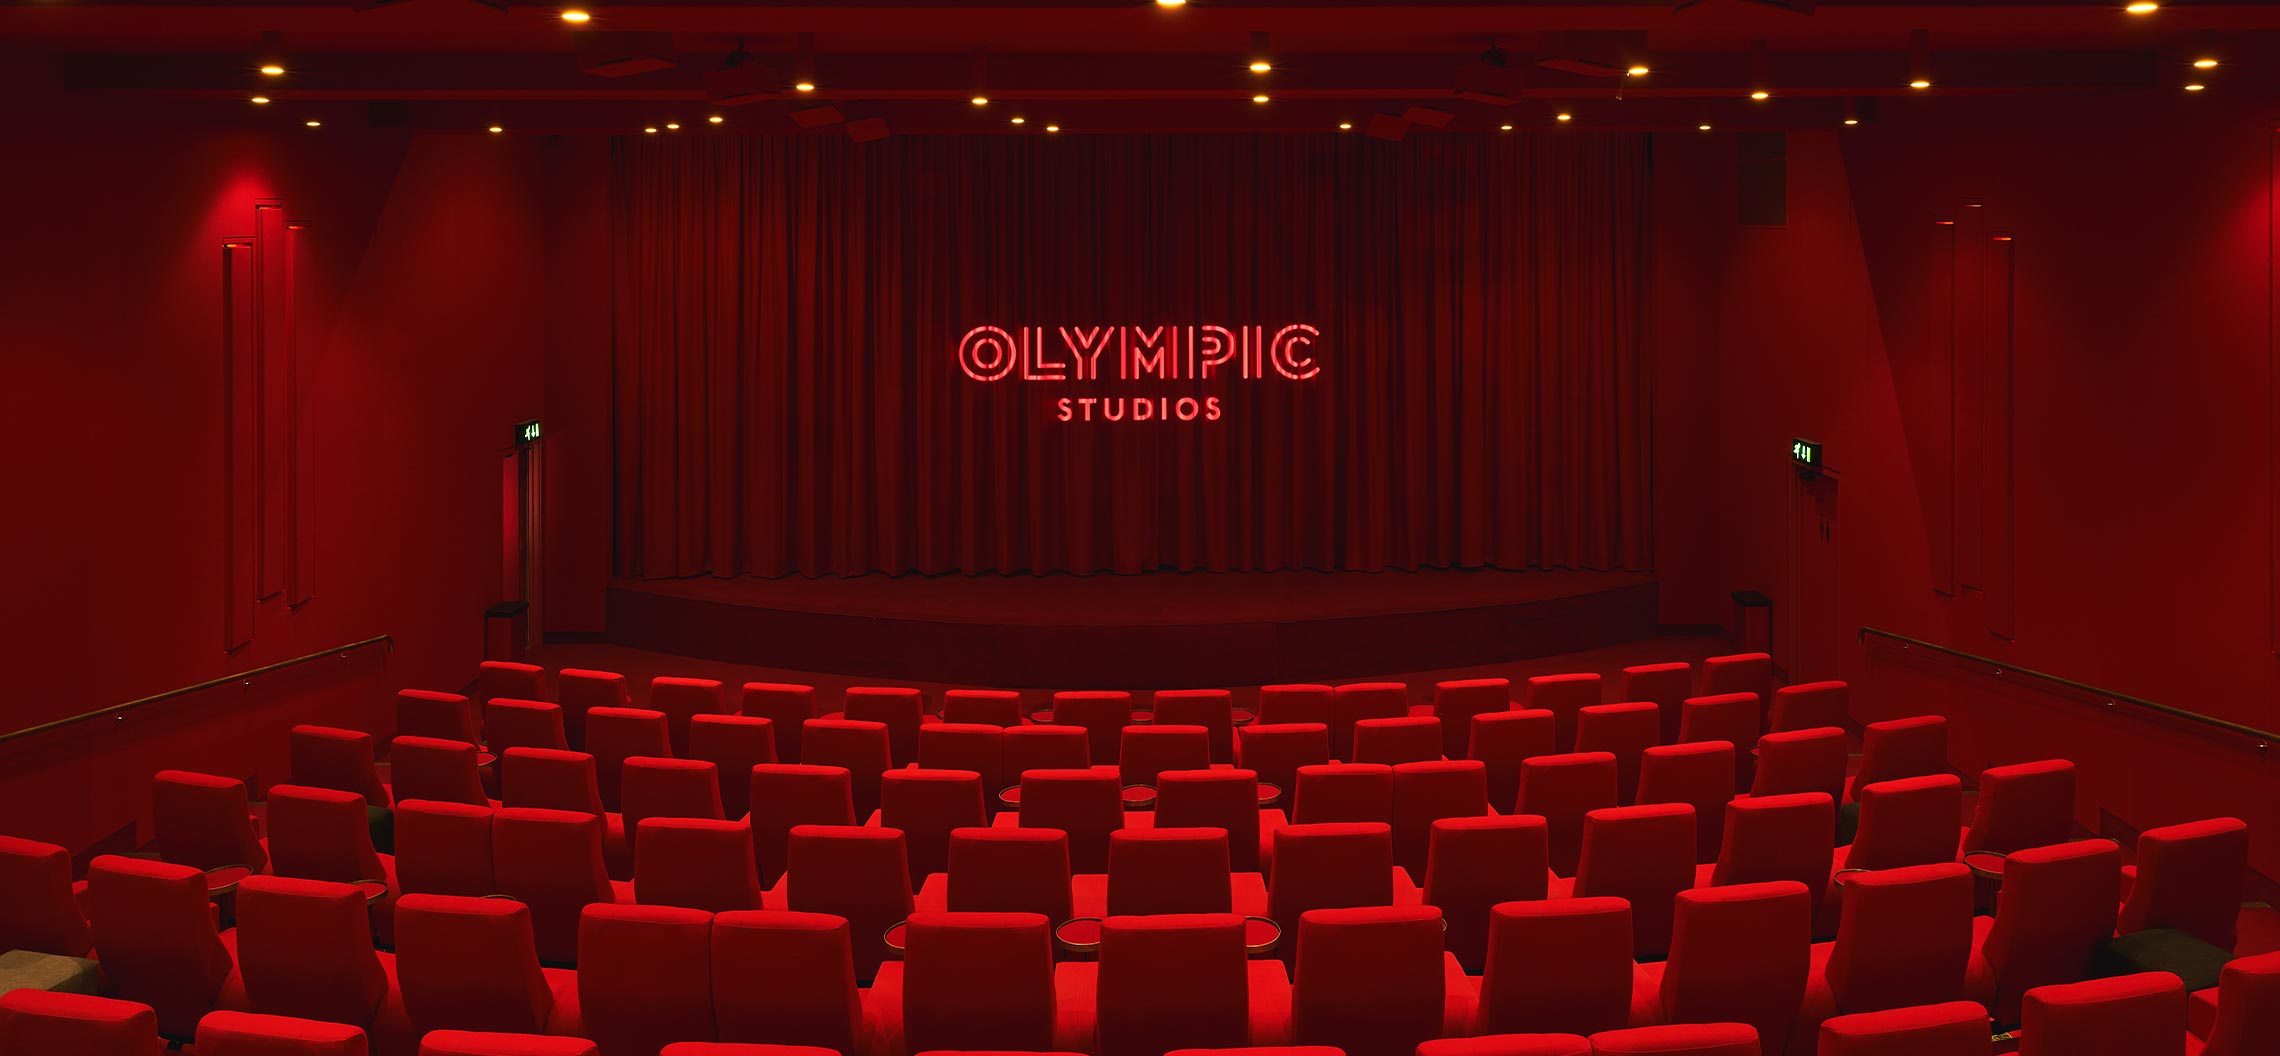 Olympic Studios Image